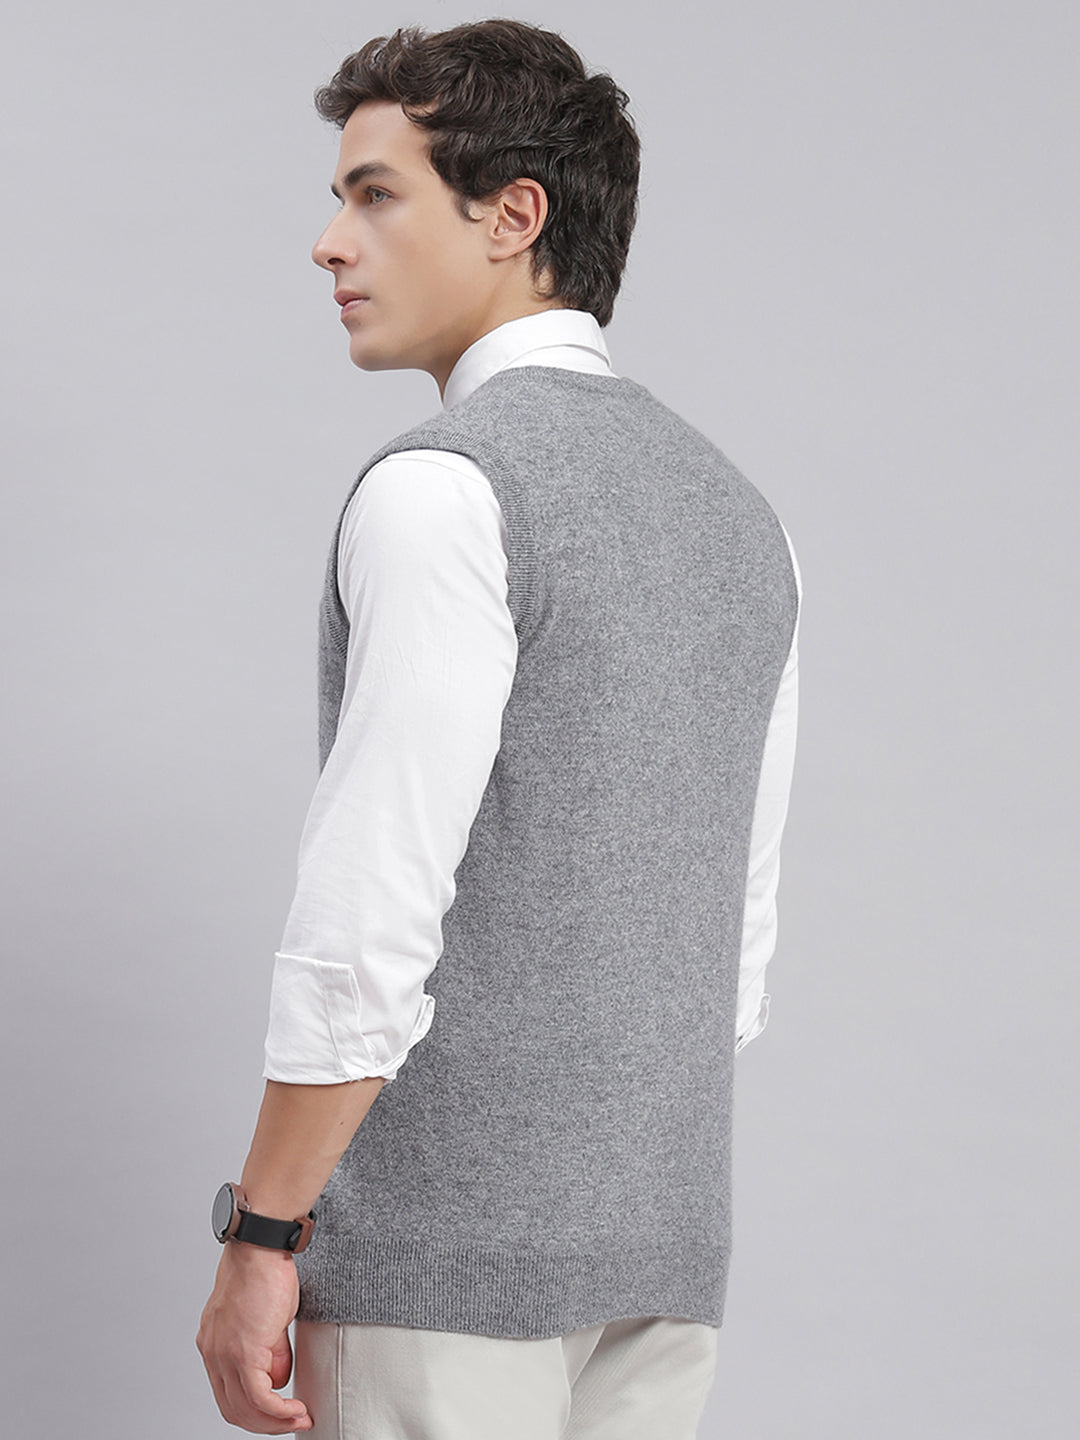 Men Grey Melange Solid V Neck Sleeveless Sweaters/Pullovers